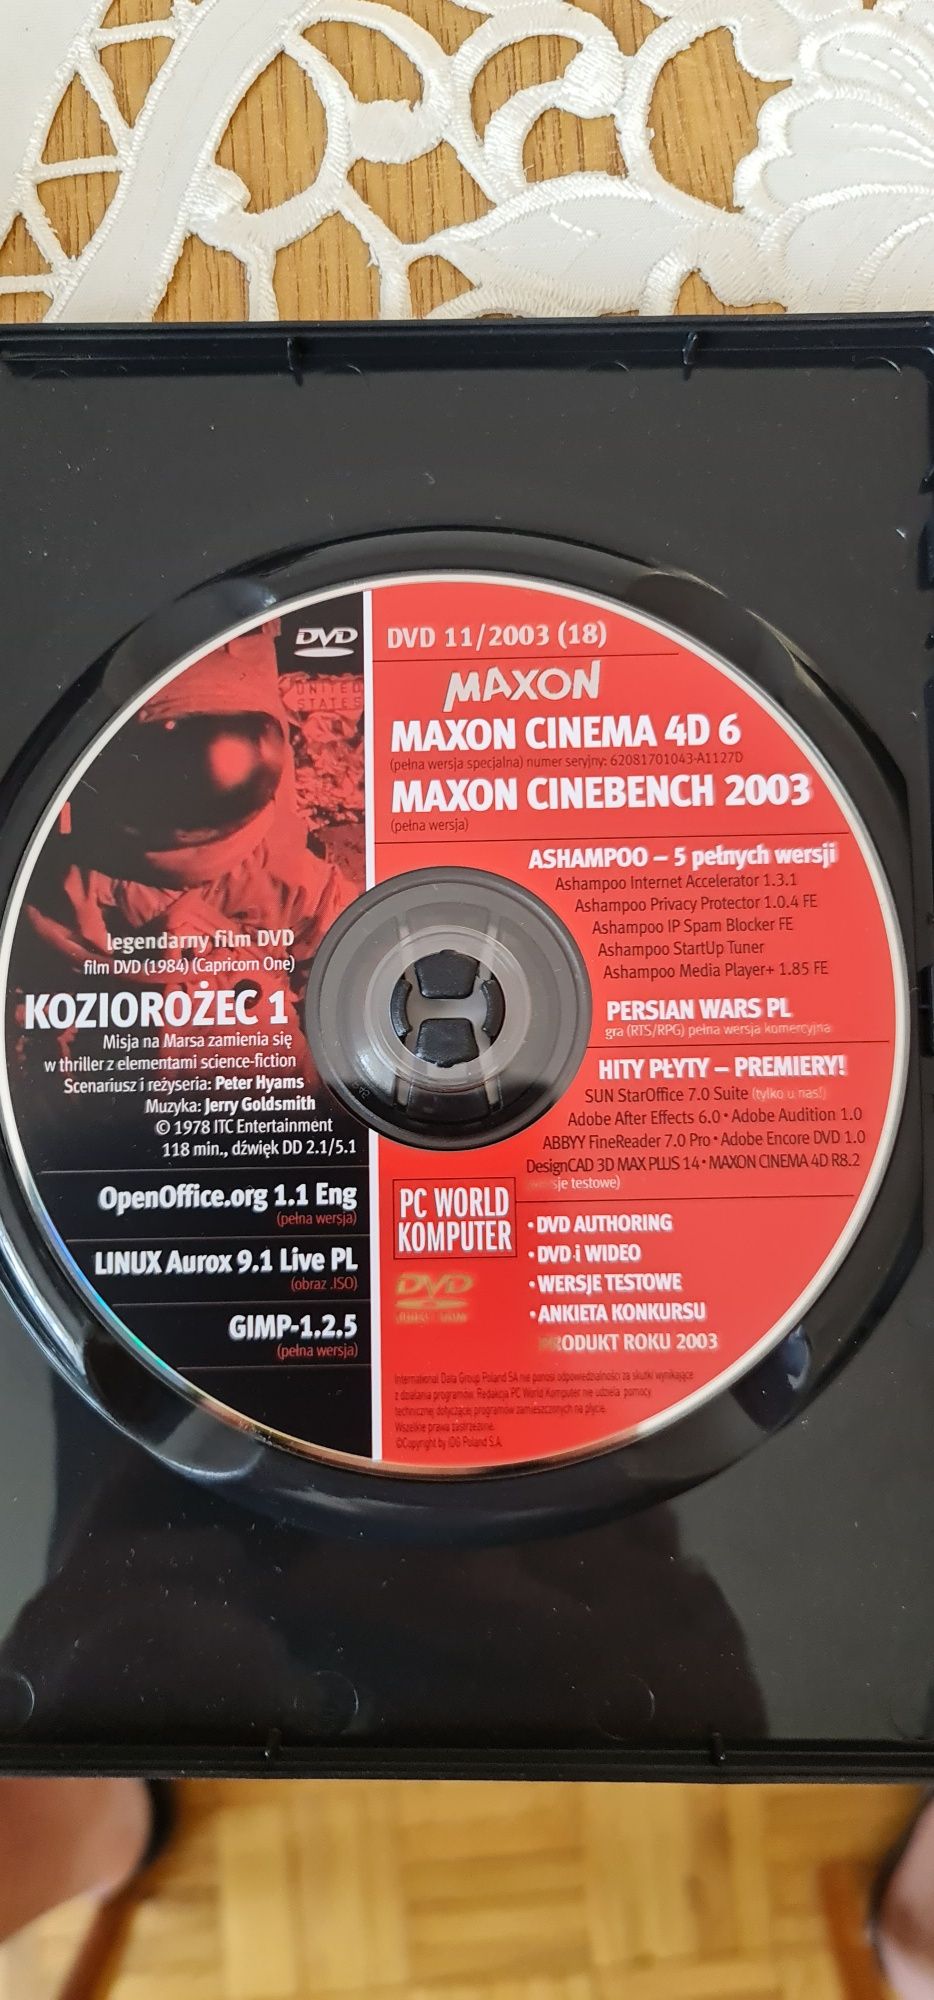 Capricorn One Koziorożec 1 DVD Dolby Digital 5.1